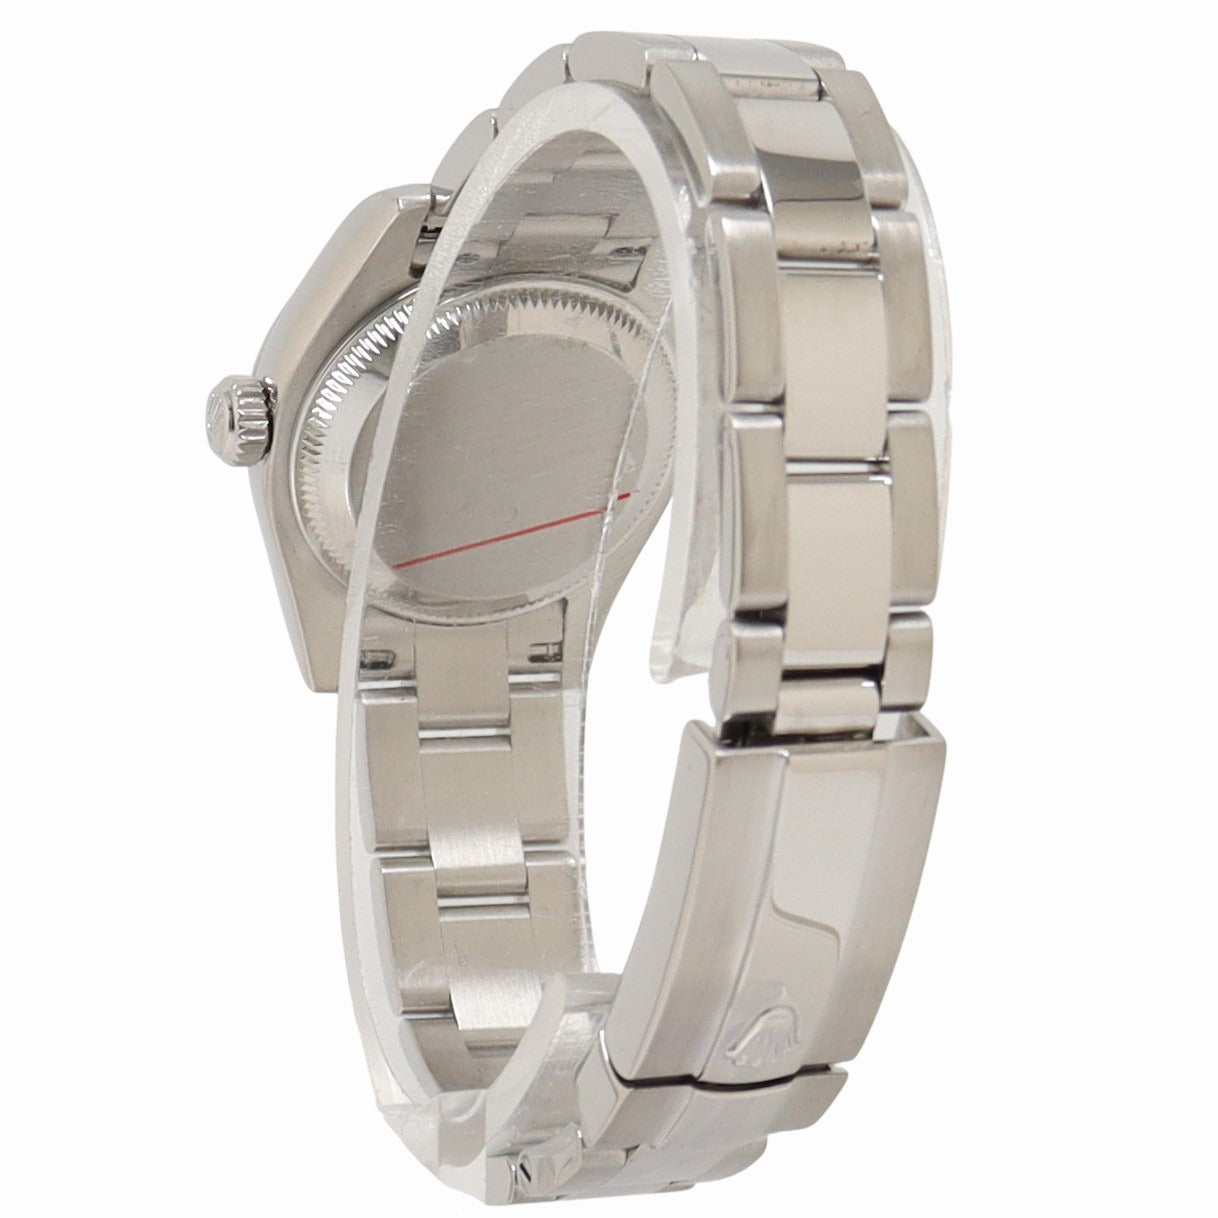 Rolex Datejust Stainless Steel 26mm Blue Roman Dial Watch Reference# 179160 - Happy Jewelers Fine Jewelry Lifetime Warranty